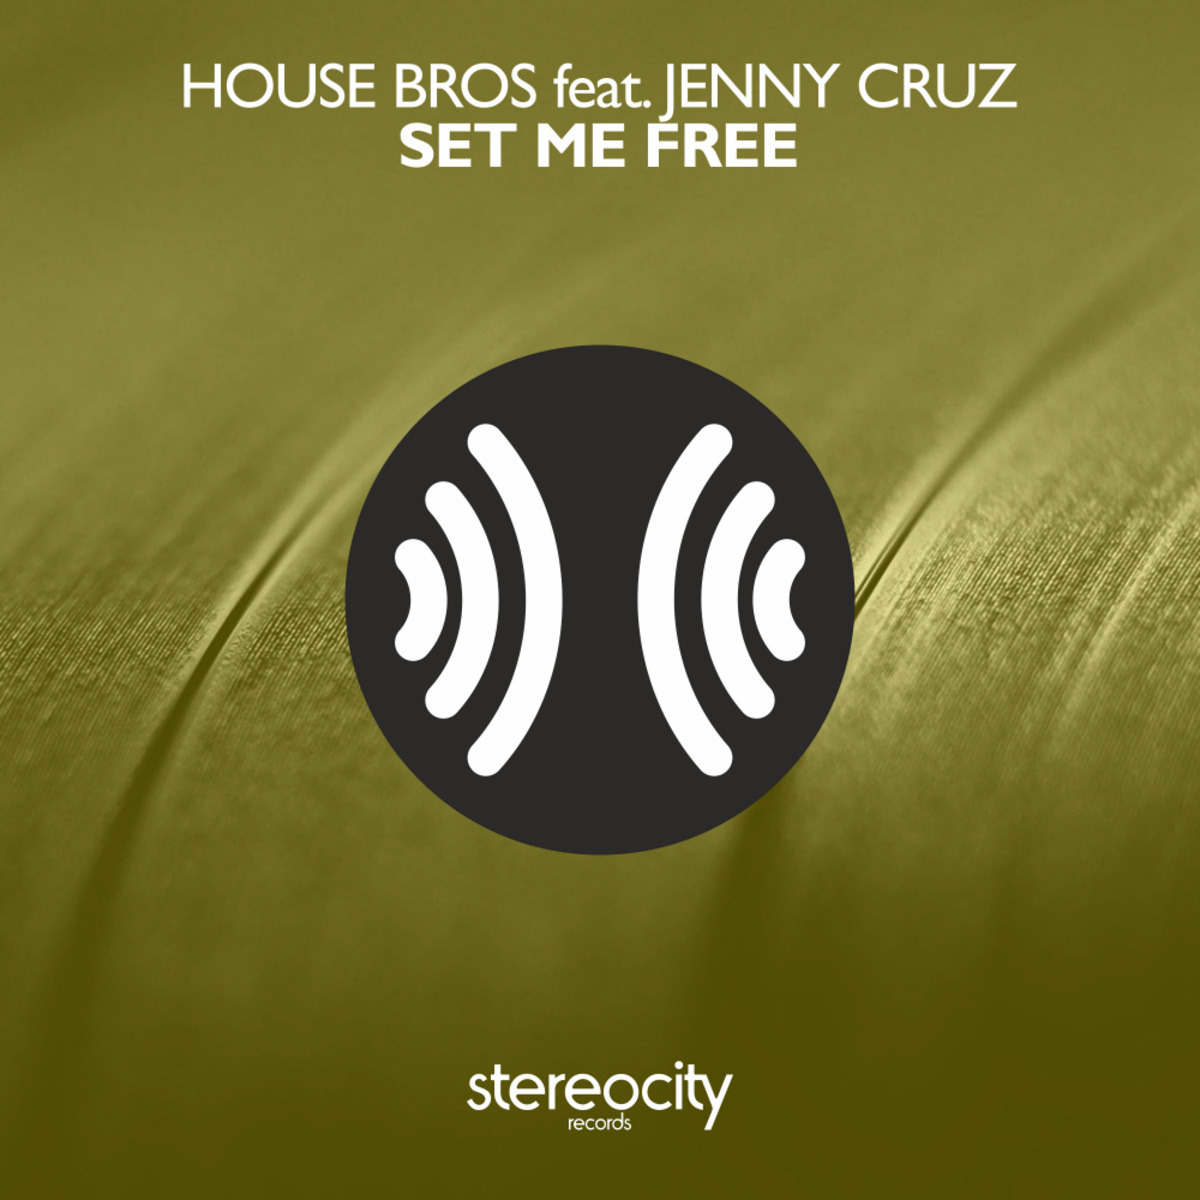 House Bros - Set Me Free / Stereocity